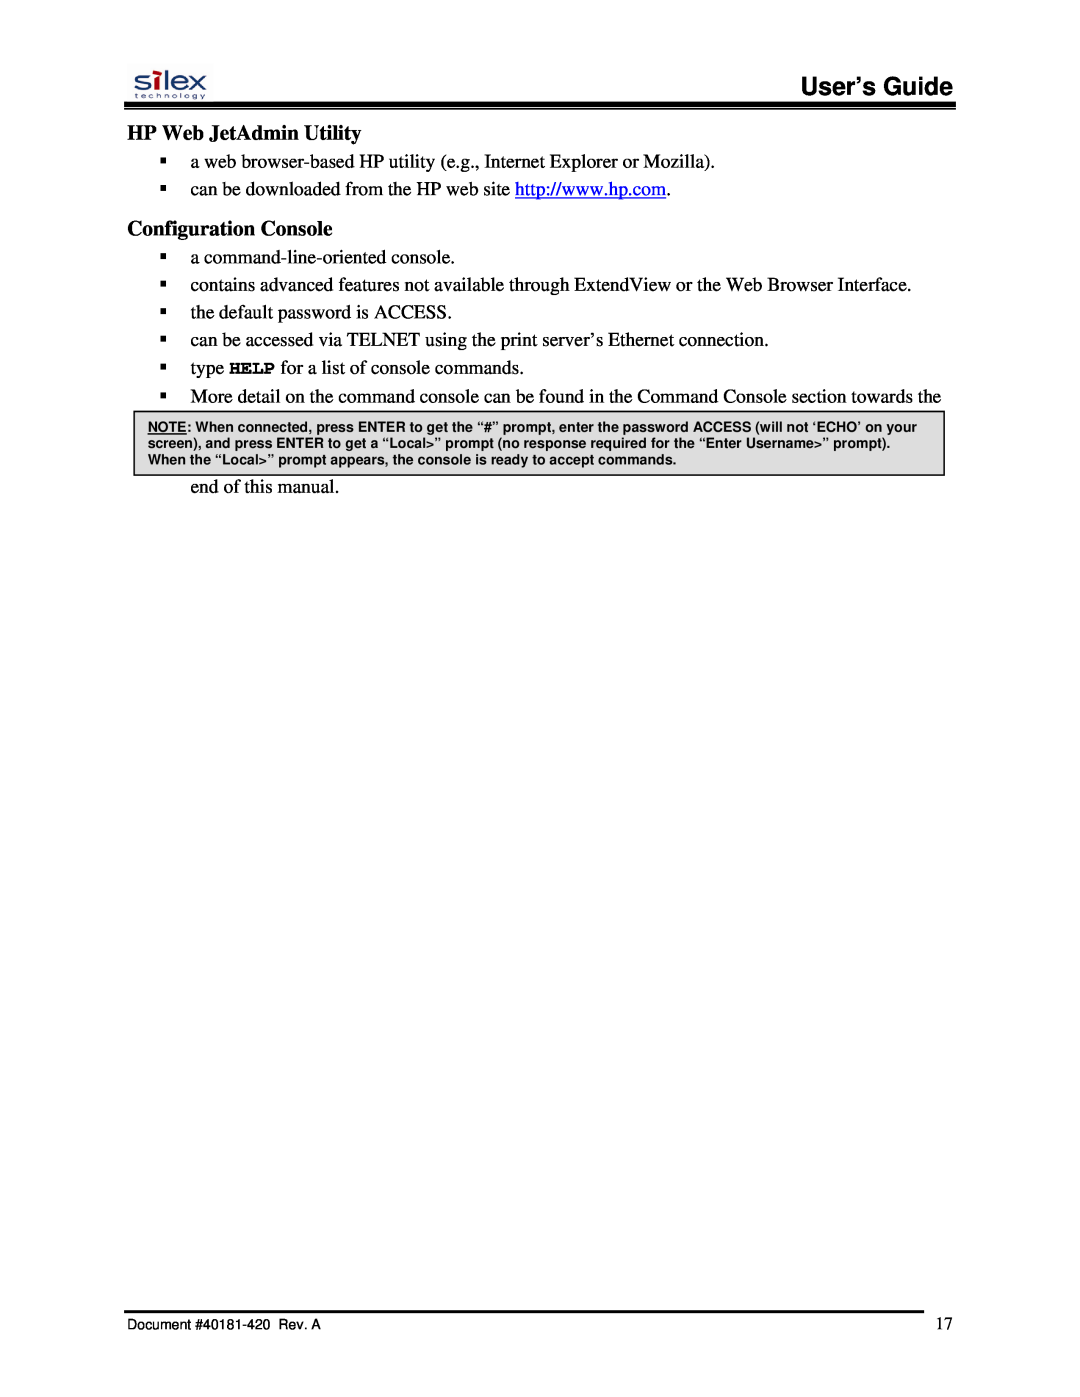 Silex technology SX-200 user manual HP Web JetAdmin Utility, Configuration Console, User’s Guide 